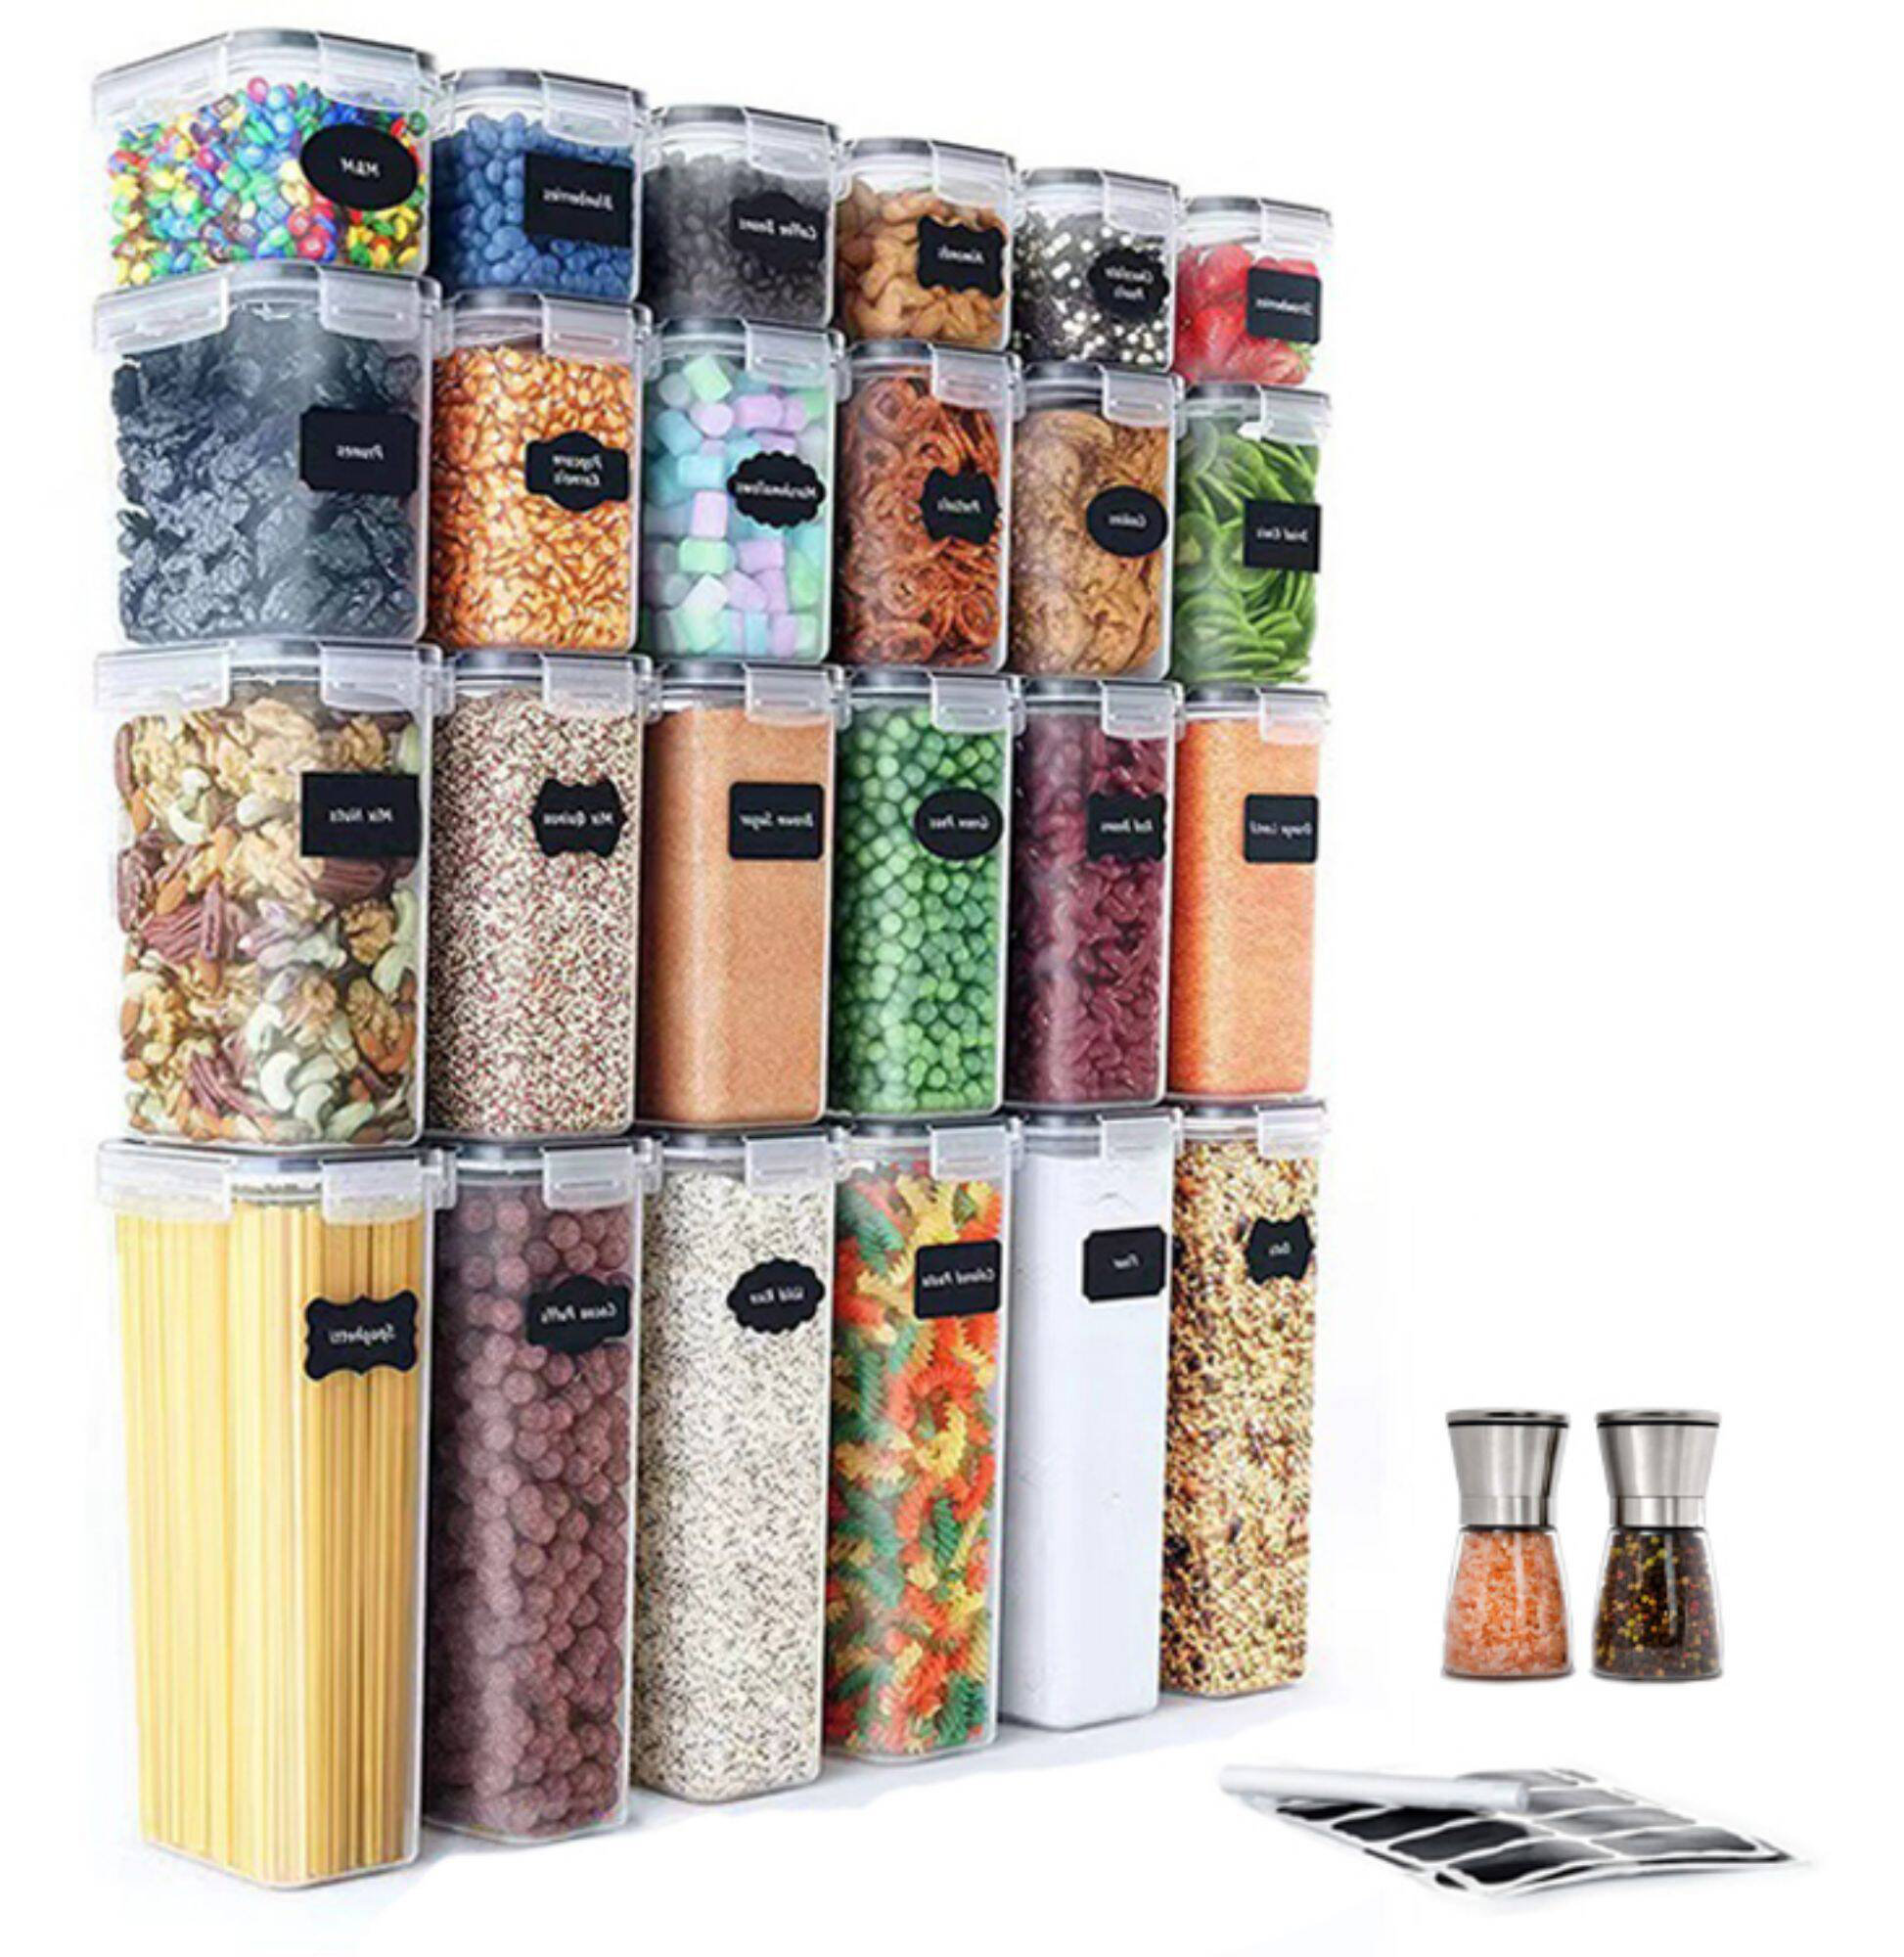 Prep & Savour Catrece 12 Container Food Storage Set